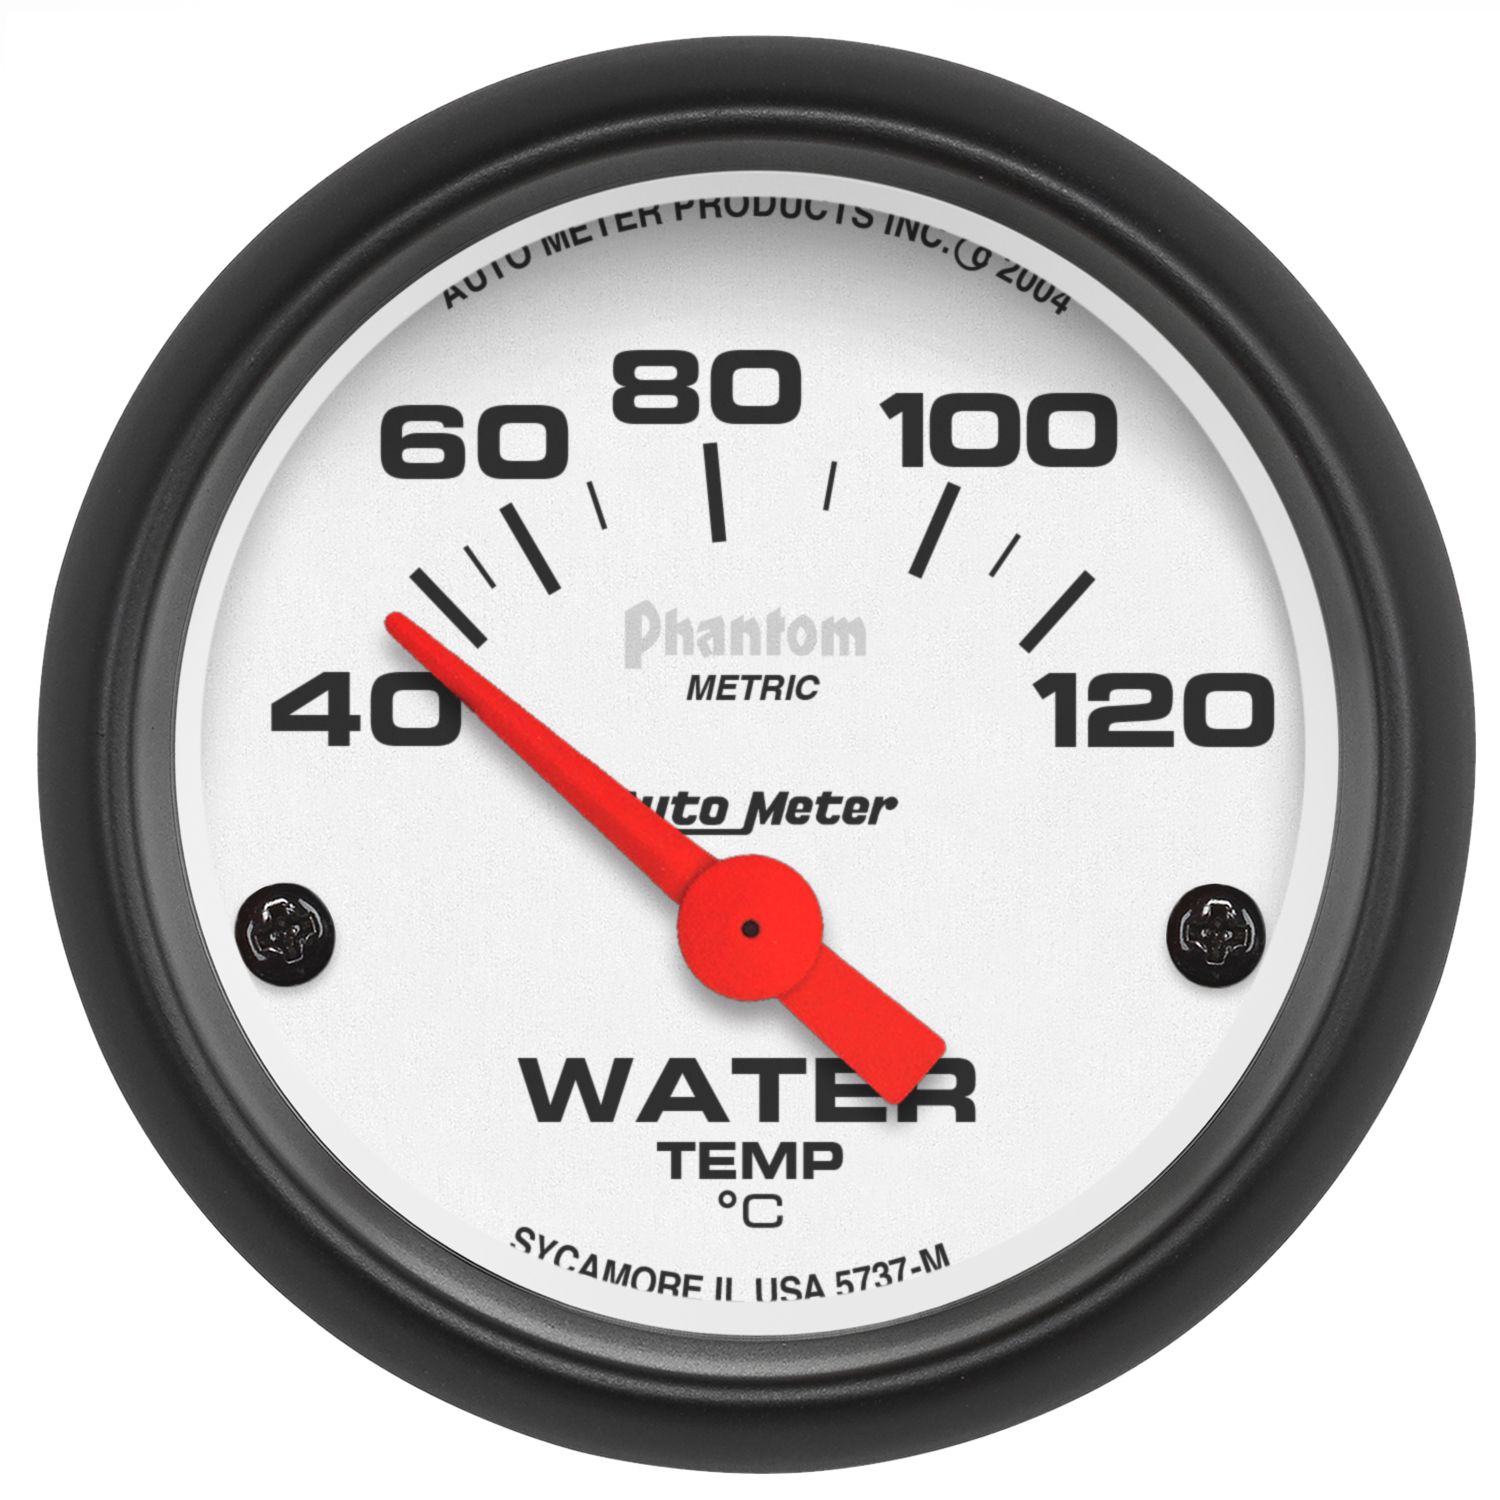 Autometer 6337 Sport-Comp Digital Water Temperature Gauge